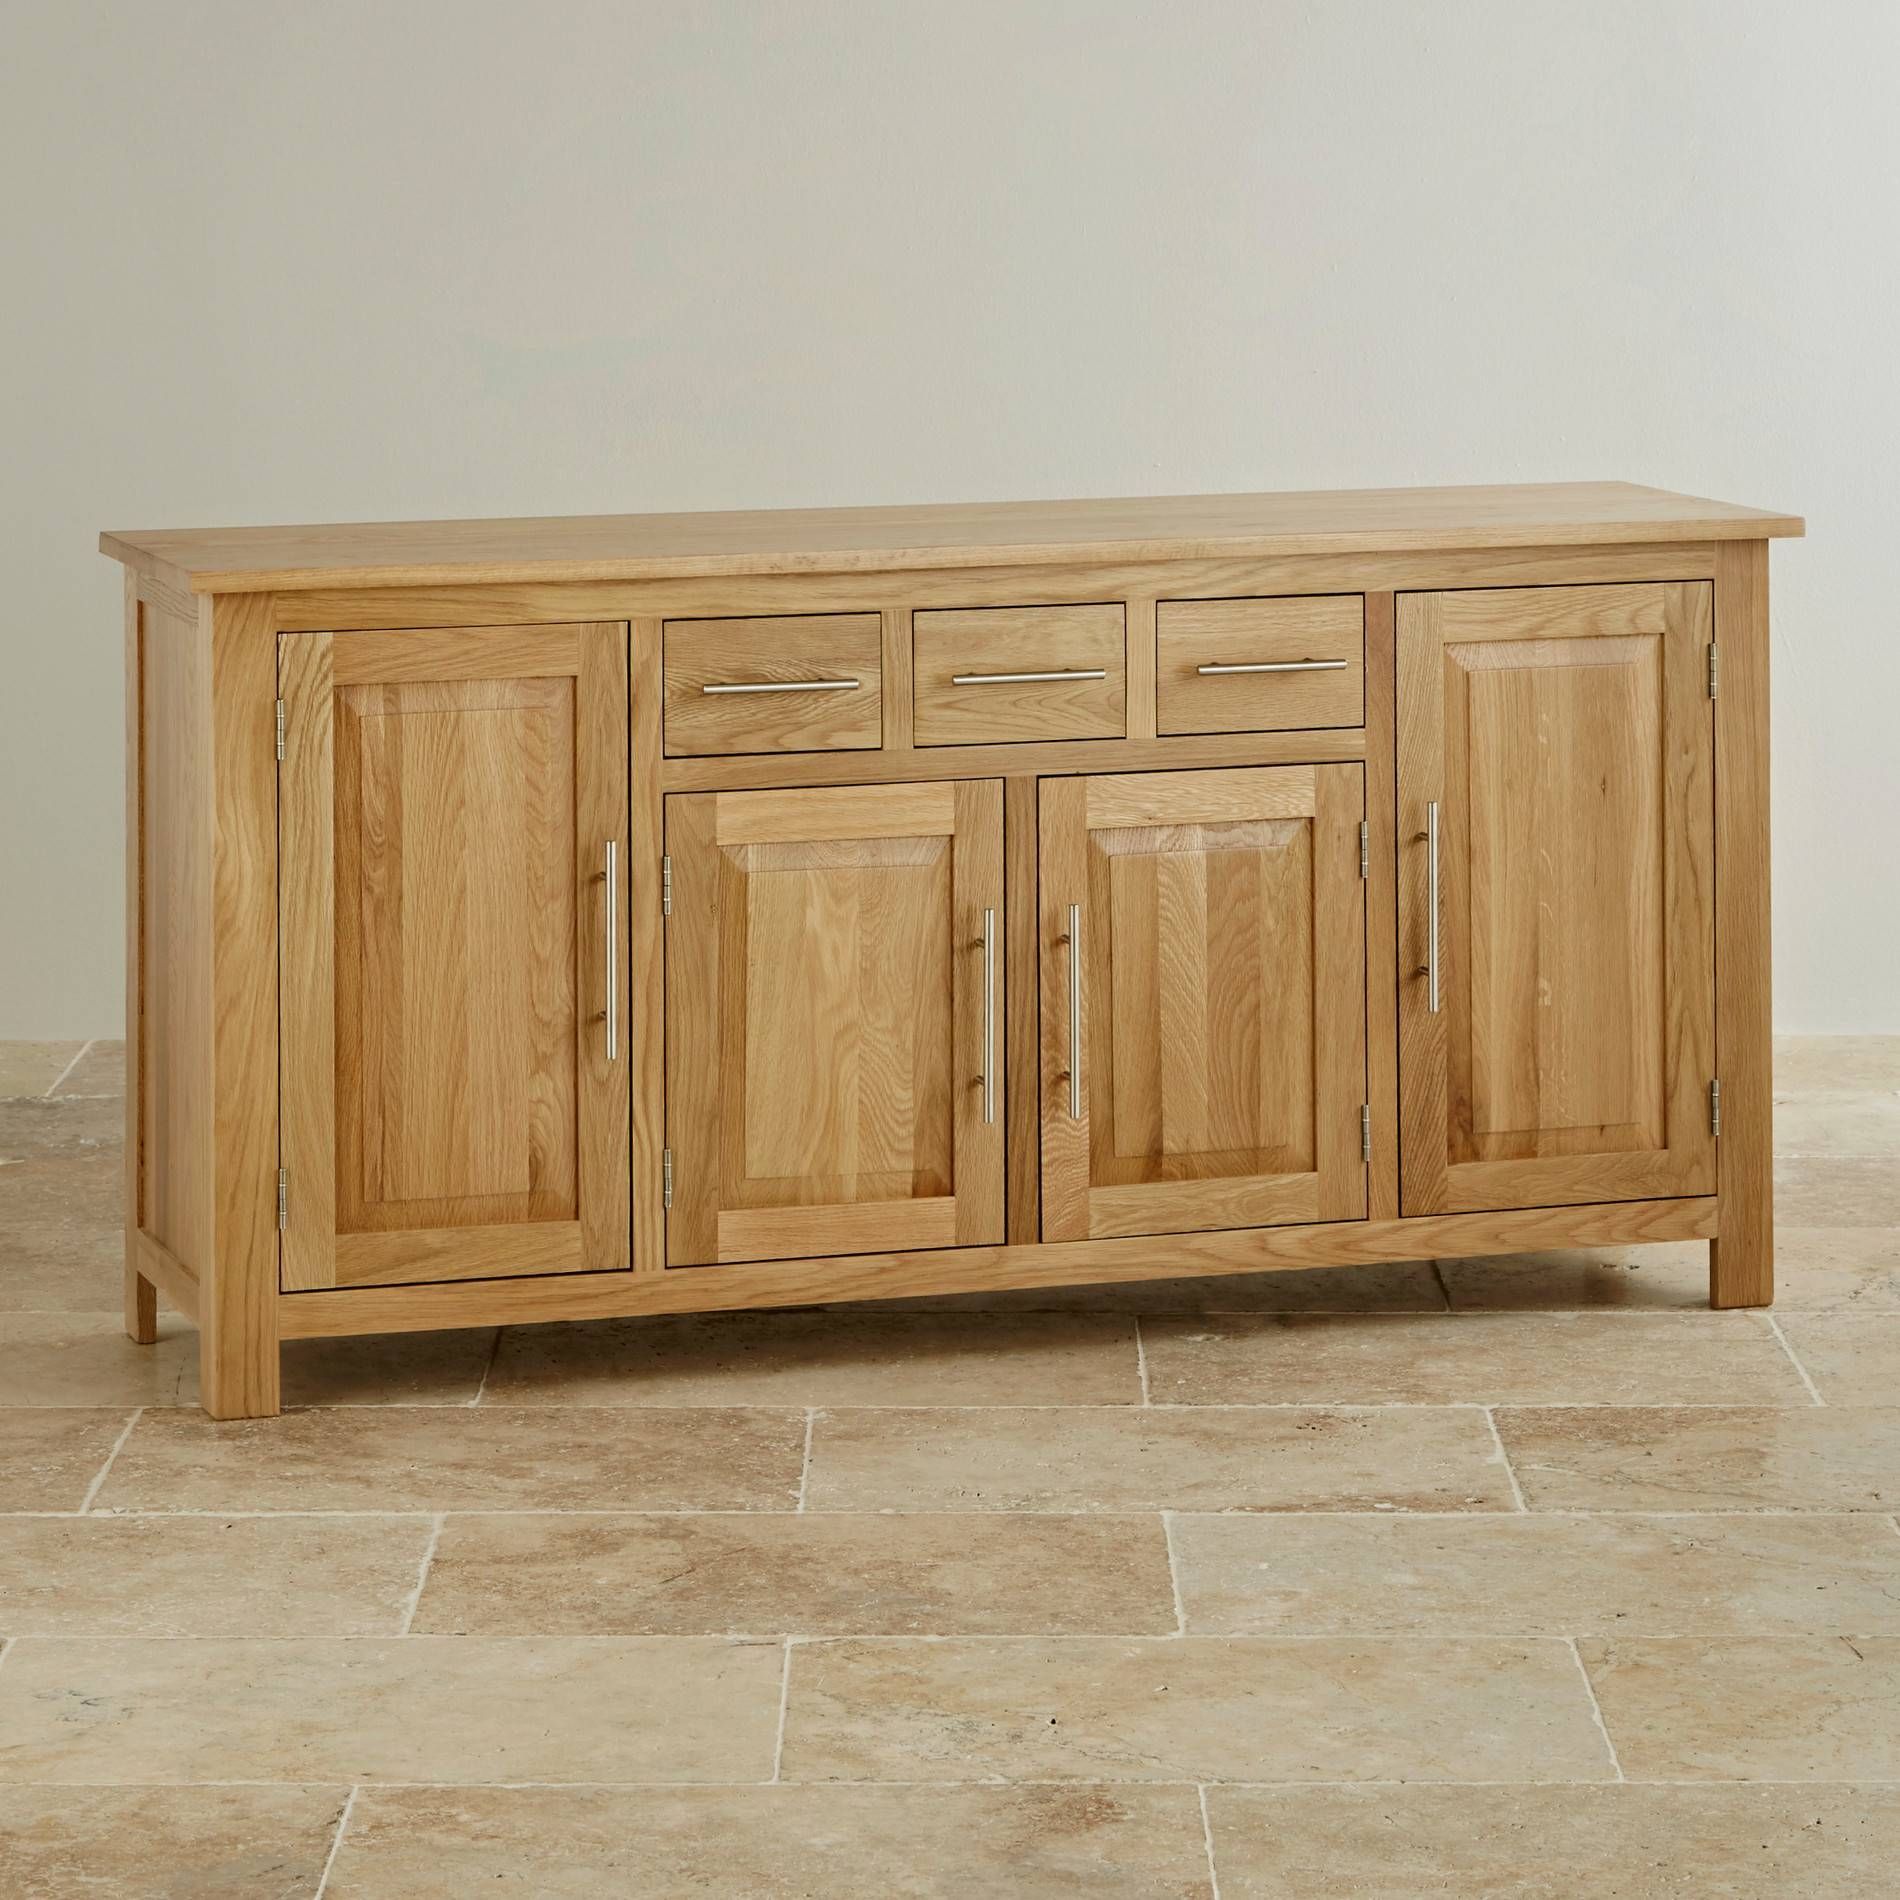 Rivermead Natural Solid Oak Large Sideboard | Oak Furniture Land Inside Best And Newest Solid Oak Sideboards (View 2 of 15)